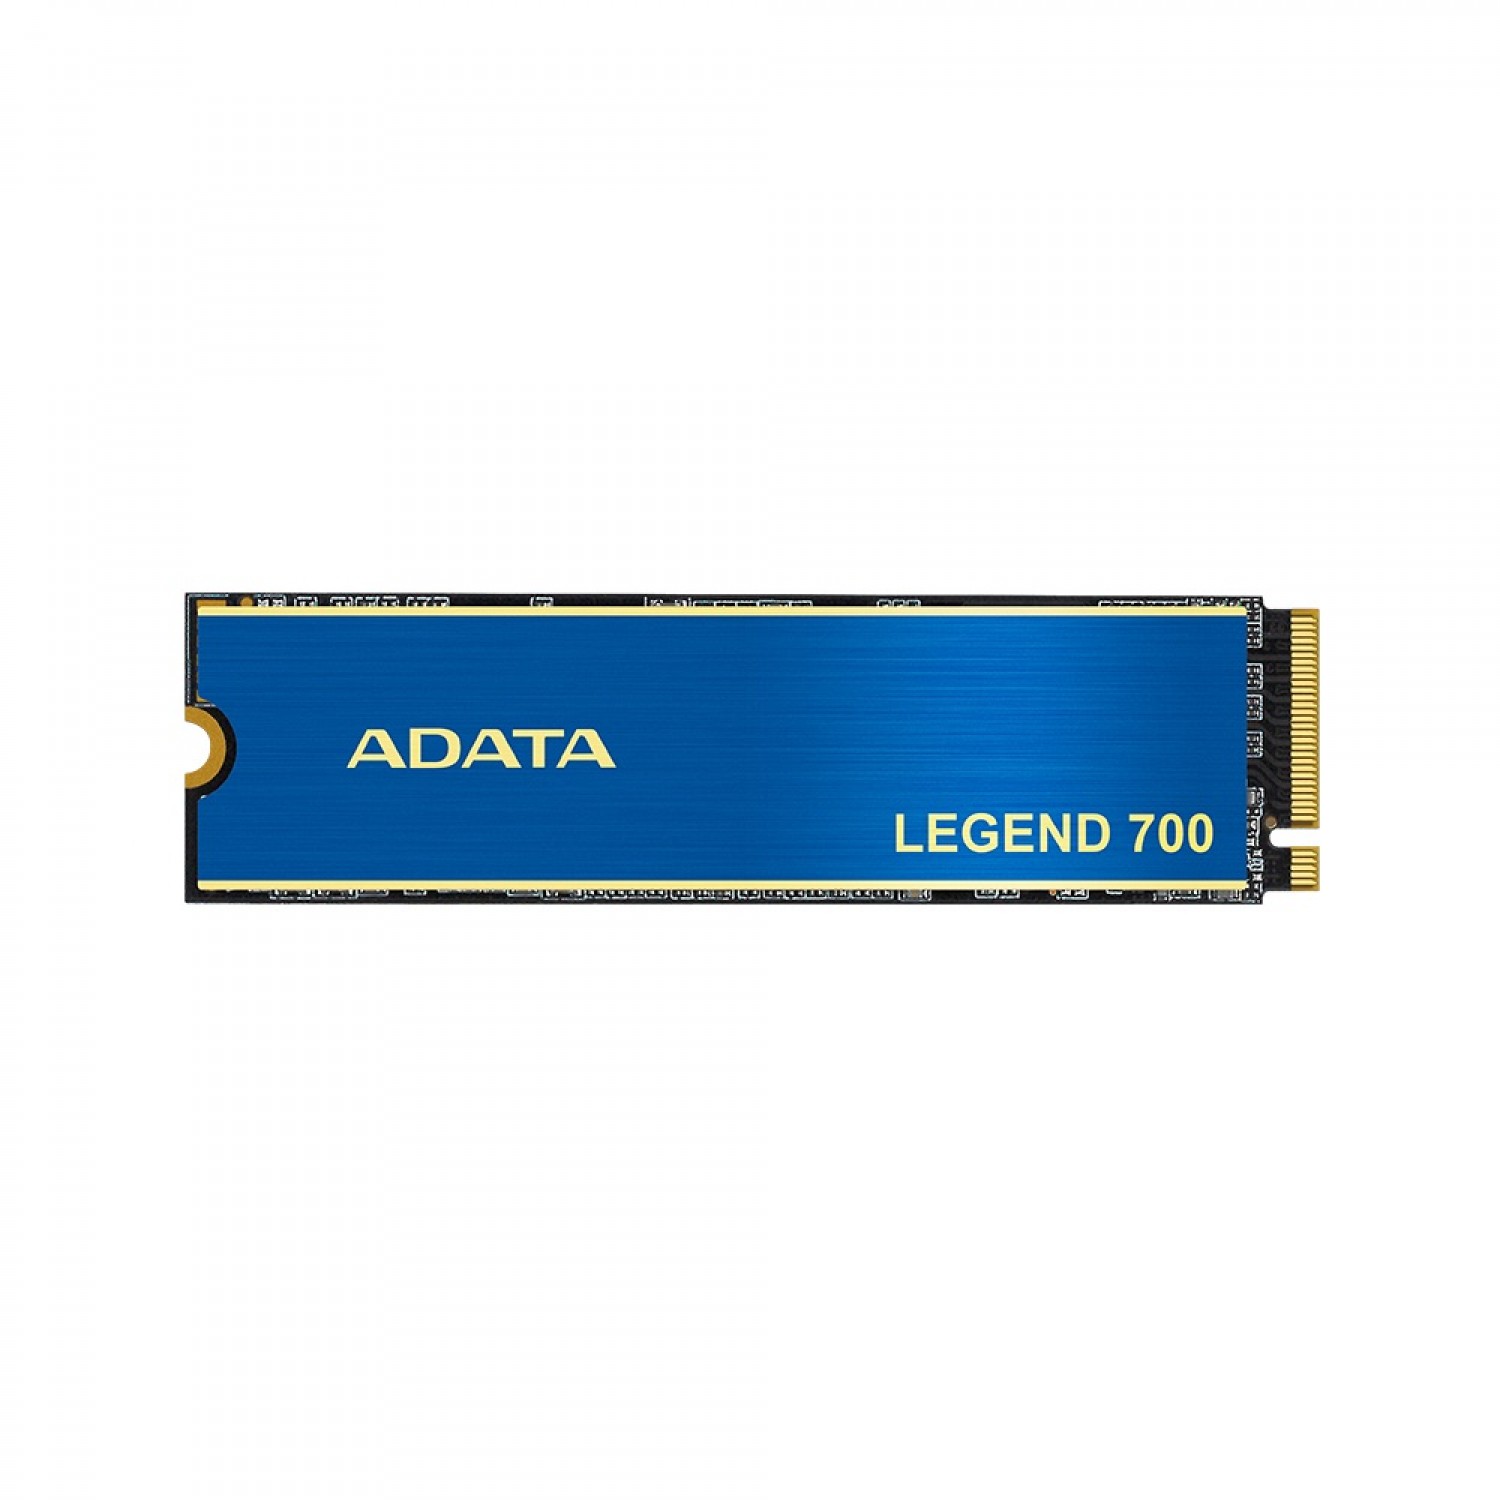 حافظه اس اس دی ADATA Legend 700 512GB